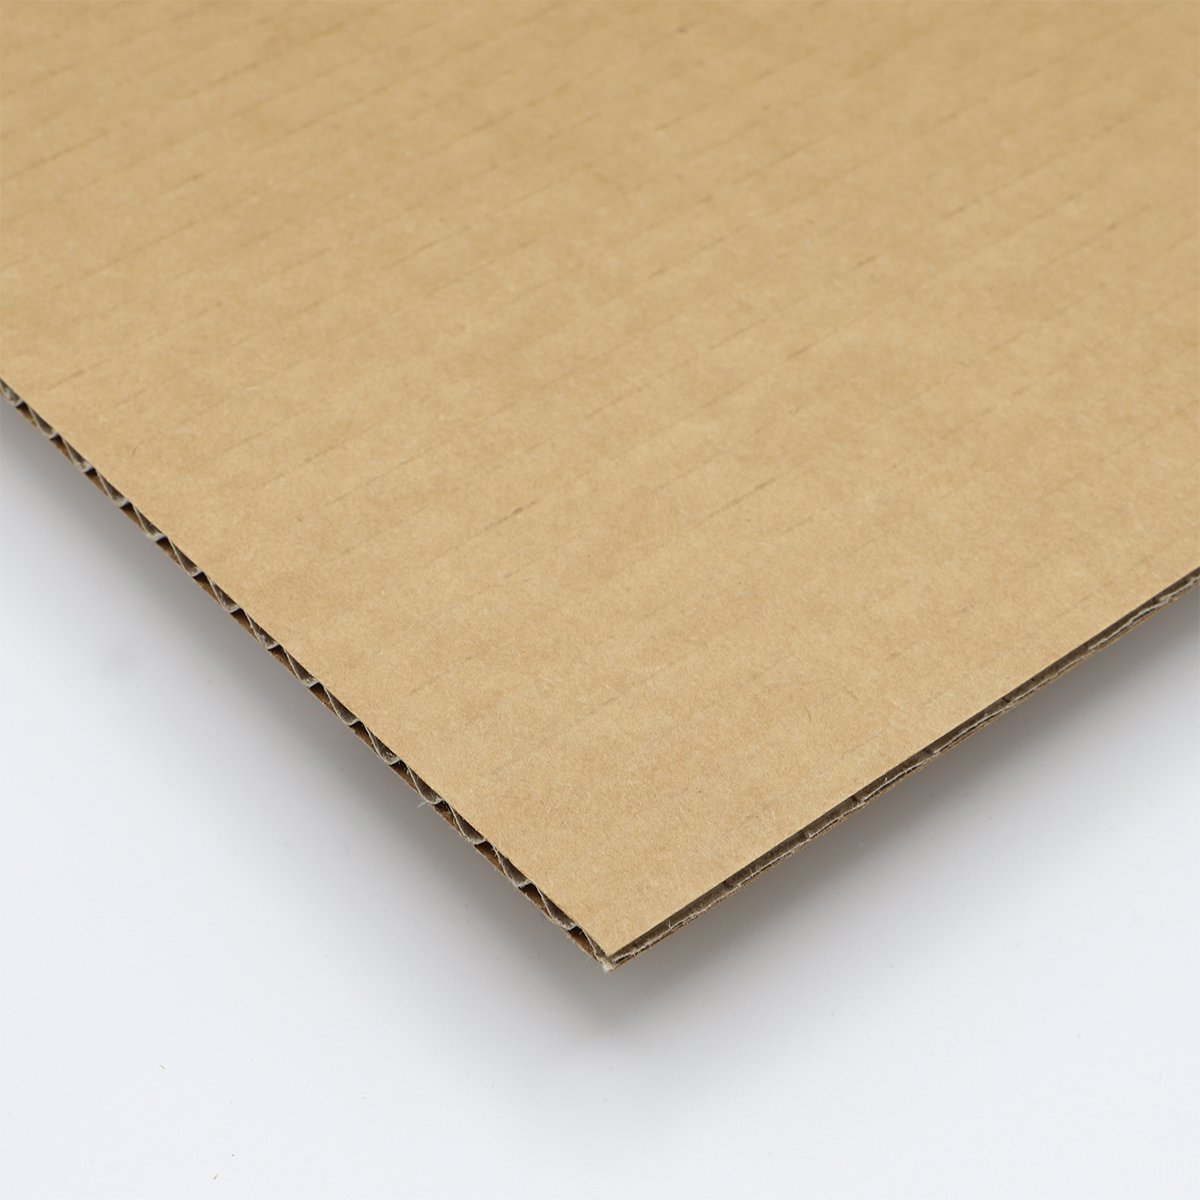 A photo of a cardboard sample